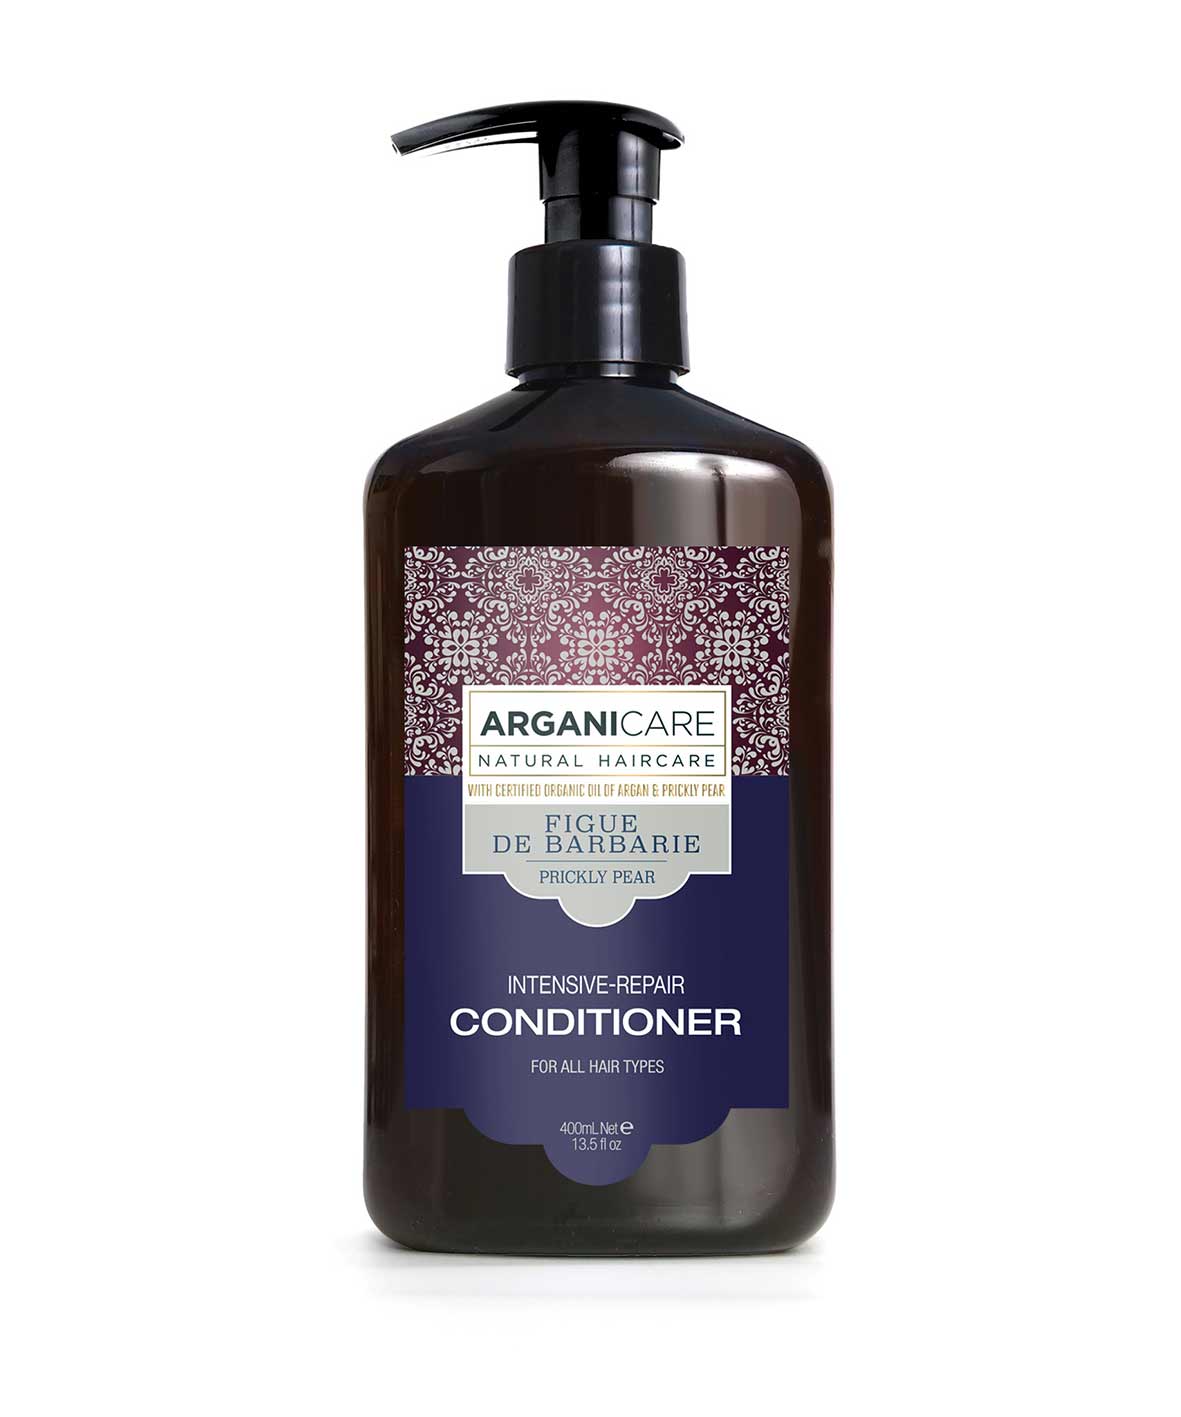 Arganicare - Figue de barbarie - Après-shampoing "Intensive Repair" - 400 ml (Collection anti-gaspi) - Arganicare - Ethni Beauty Market